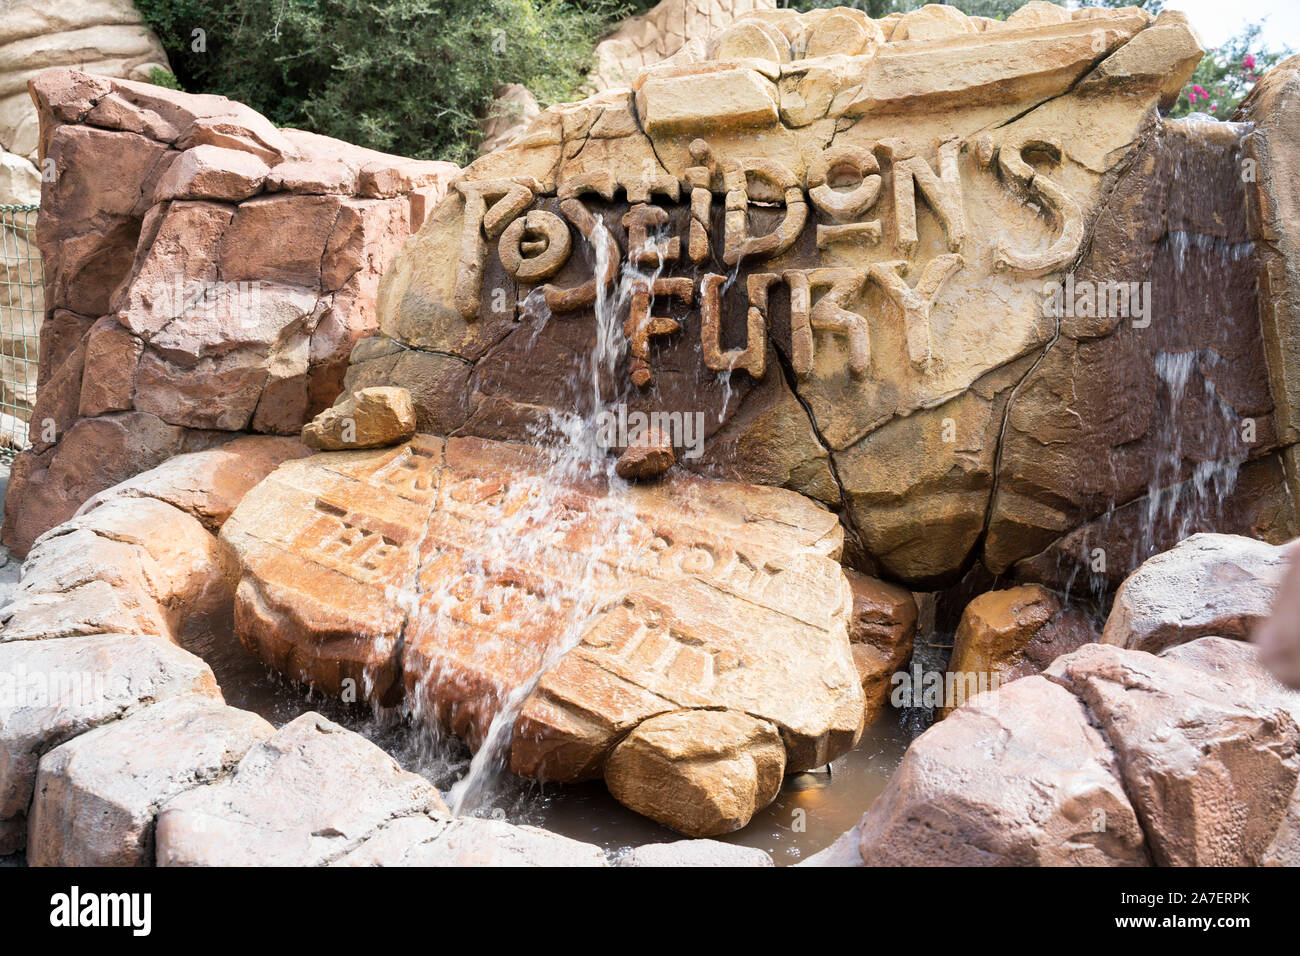 Poseidon's Fury at the Lost Continent, Islands of Adventure, Universal Studios Resort, Orlando, Florida, USA Stock Photo